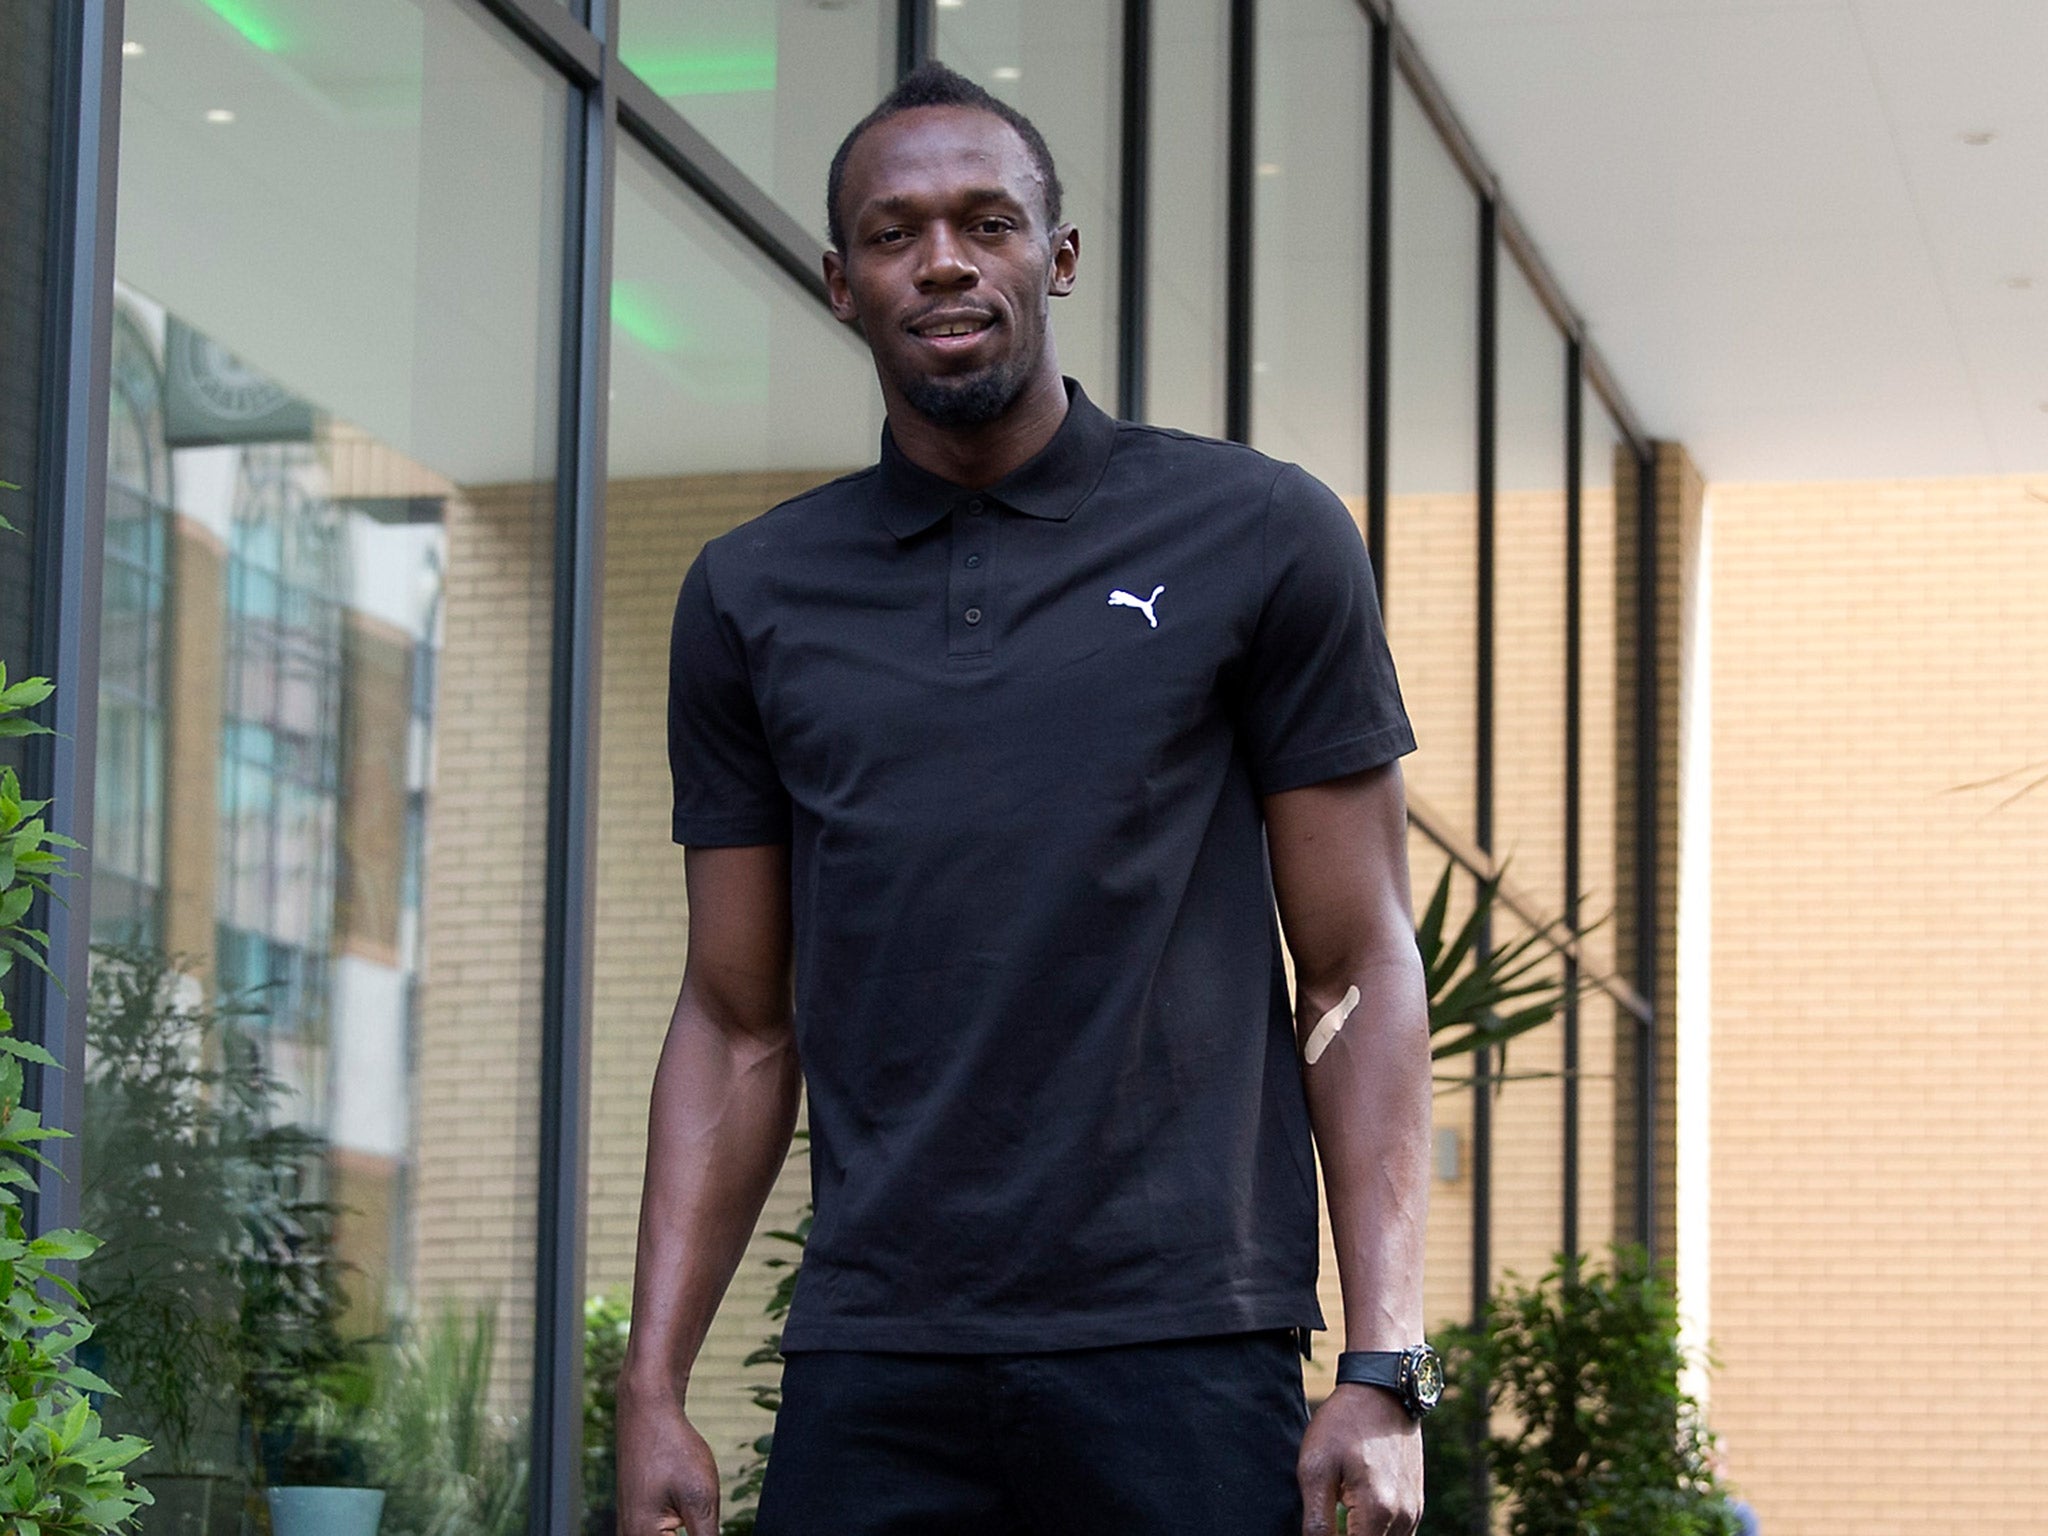 Bolt runs in both the 100m and 200m as well as the 4x100m relay for Jamaica